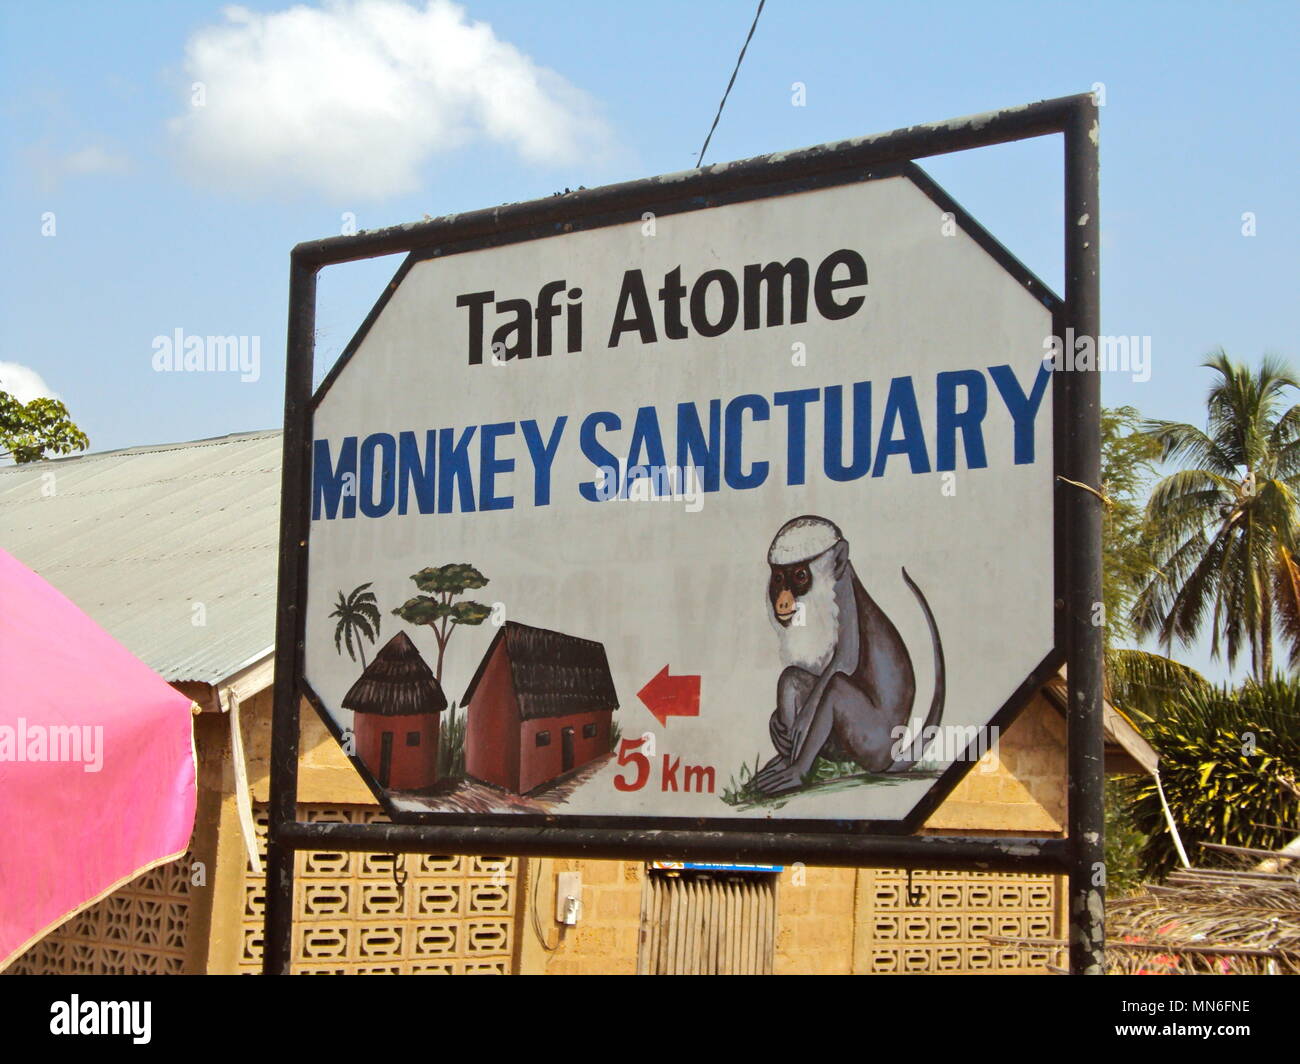 Drawn sign for Tafi Atome Monkey Sanctuary, Community-based Ecotourism. Stock Photo